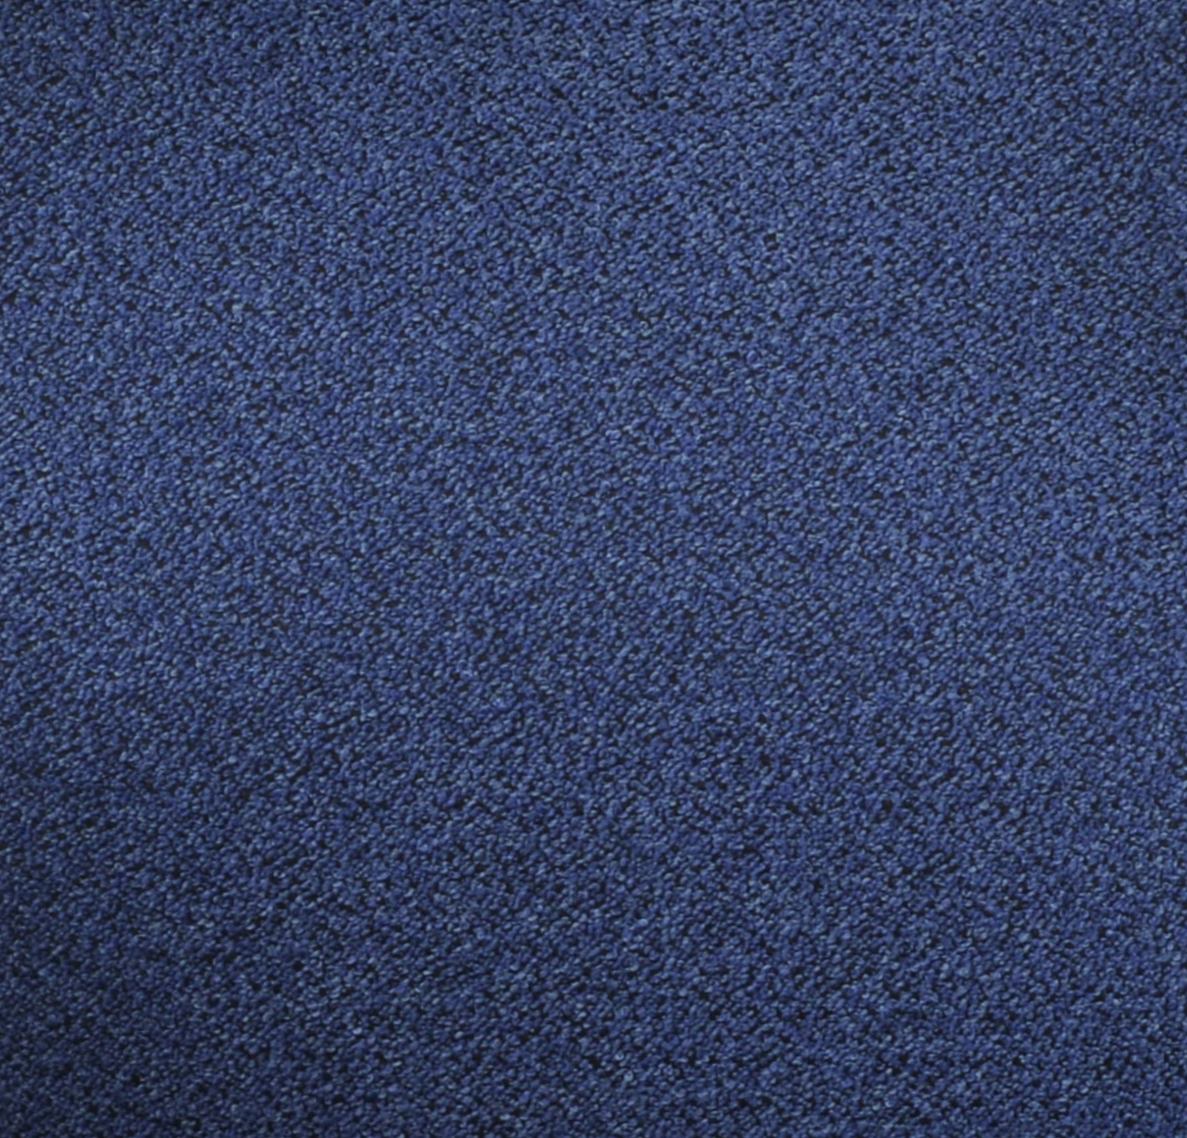 Boucle Fabric Blue-Black [+$60.00]